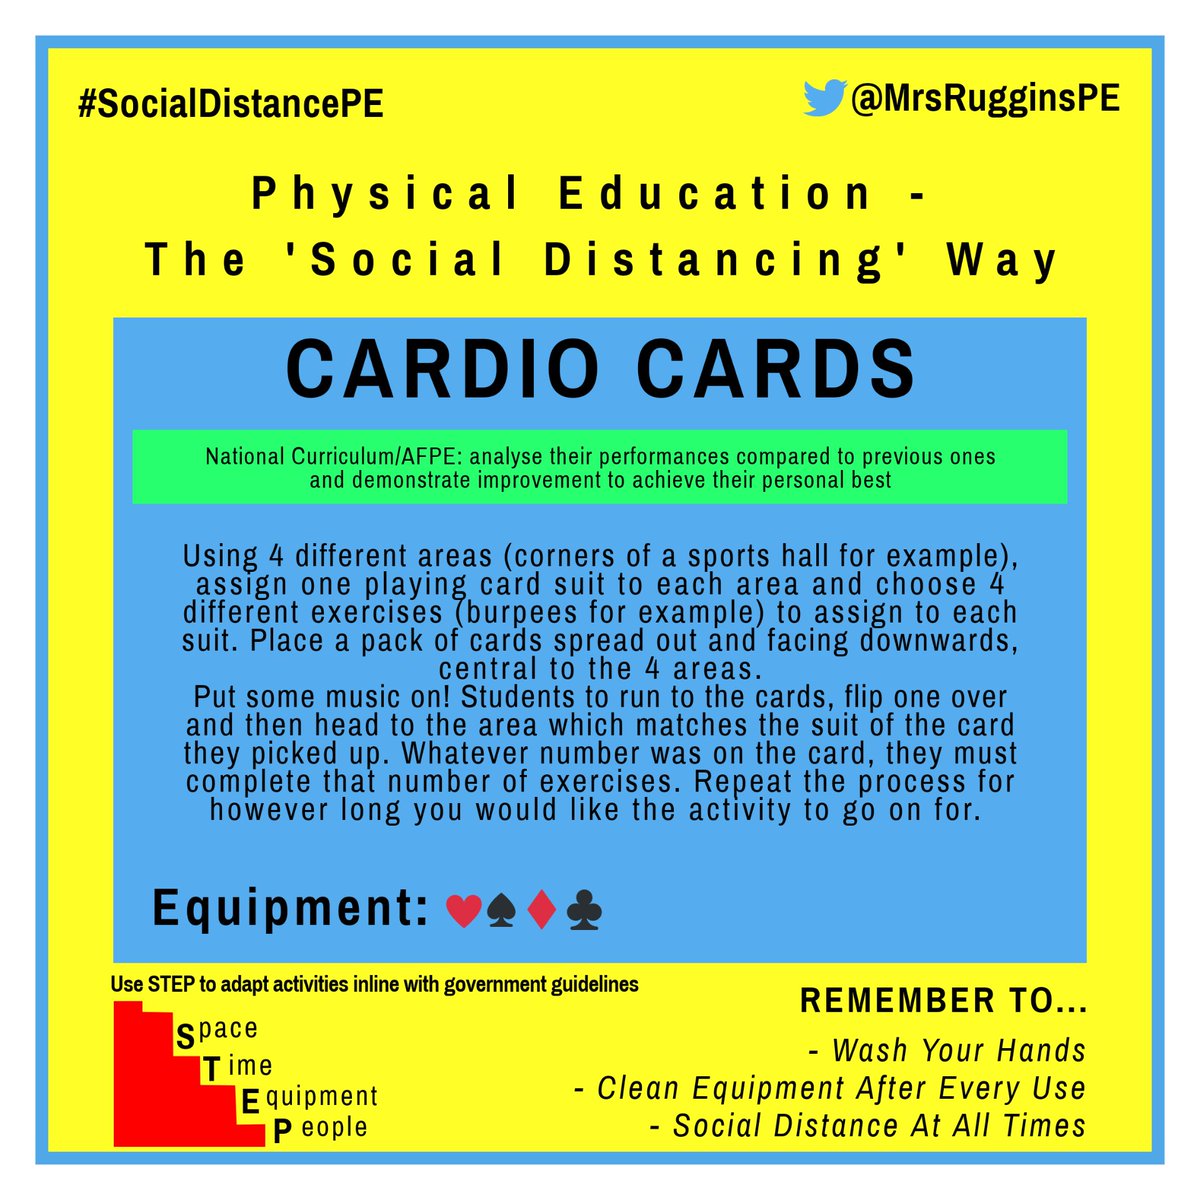 PE - The Social Distancing Way#7 CARDIO CARDS #SocialDistancePE  #EDuPe  #Edutwitter